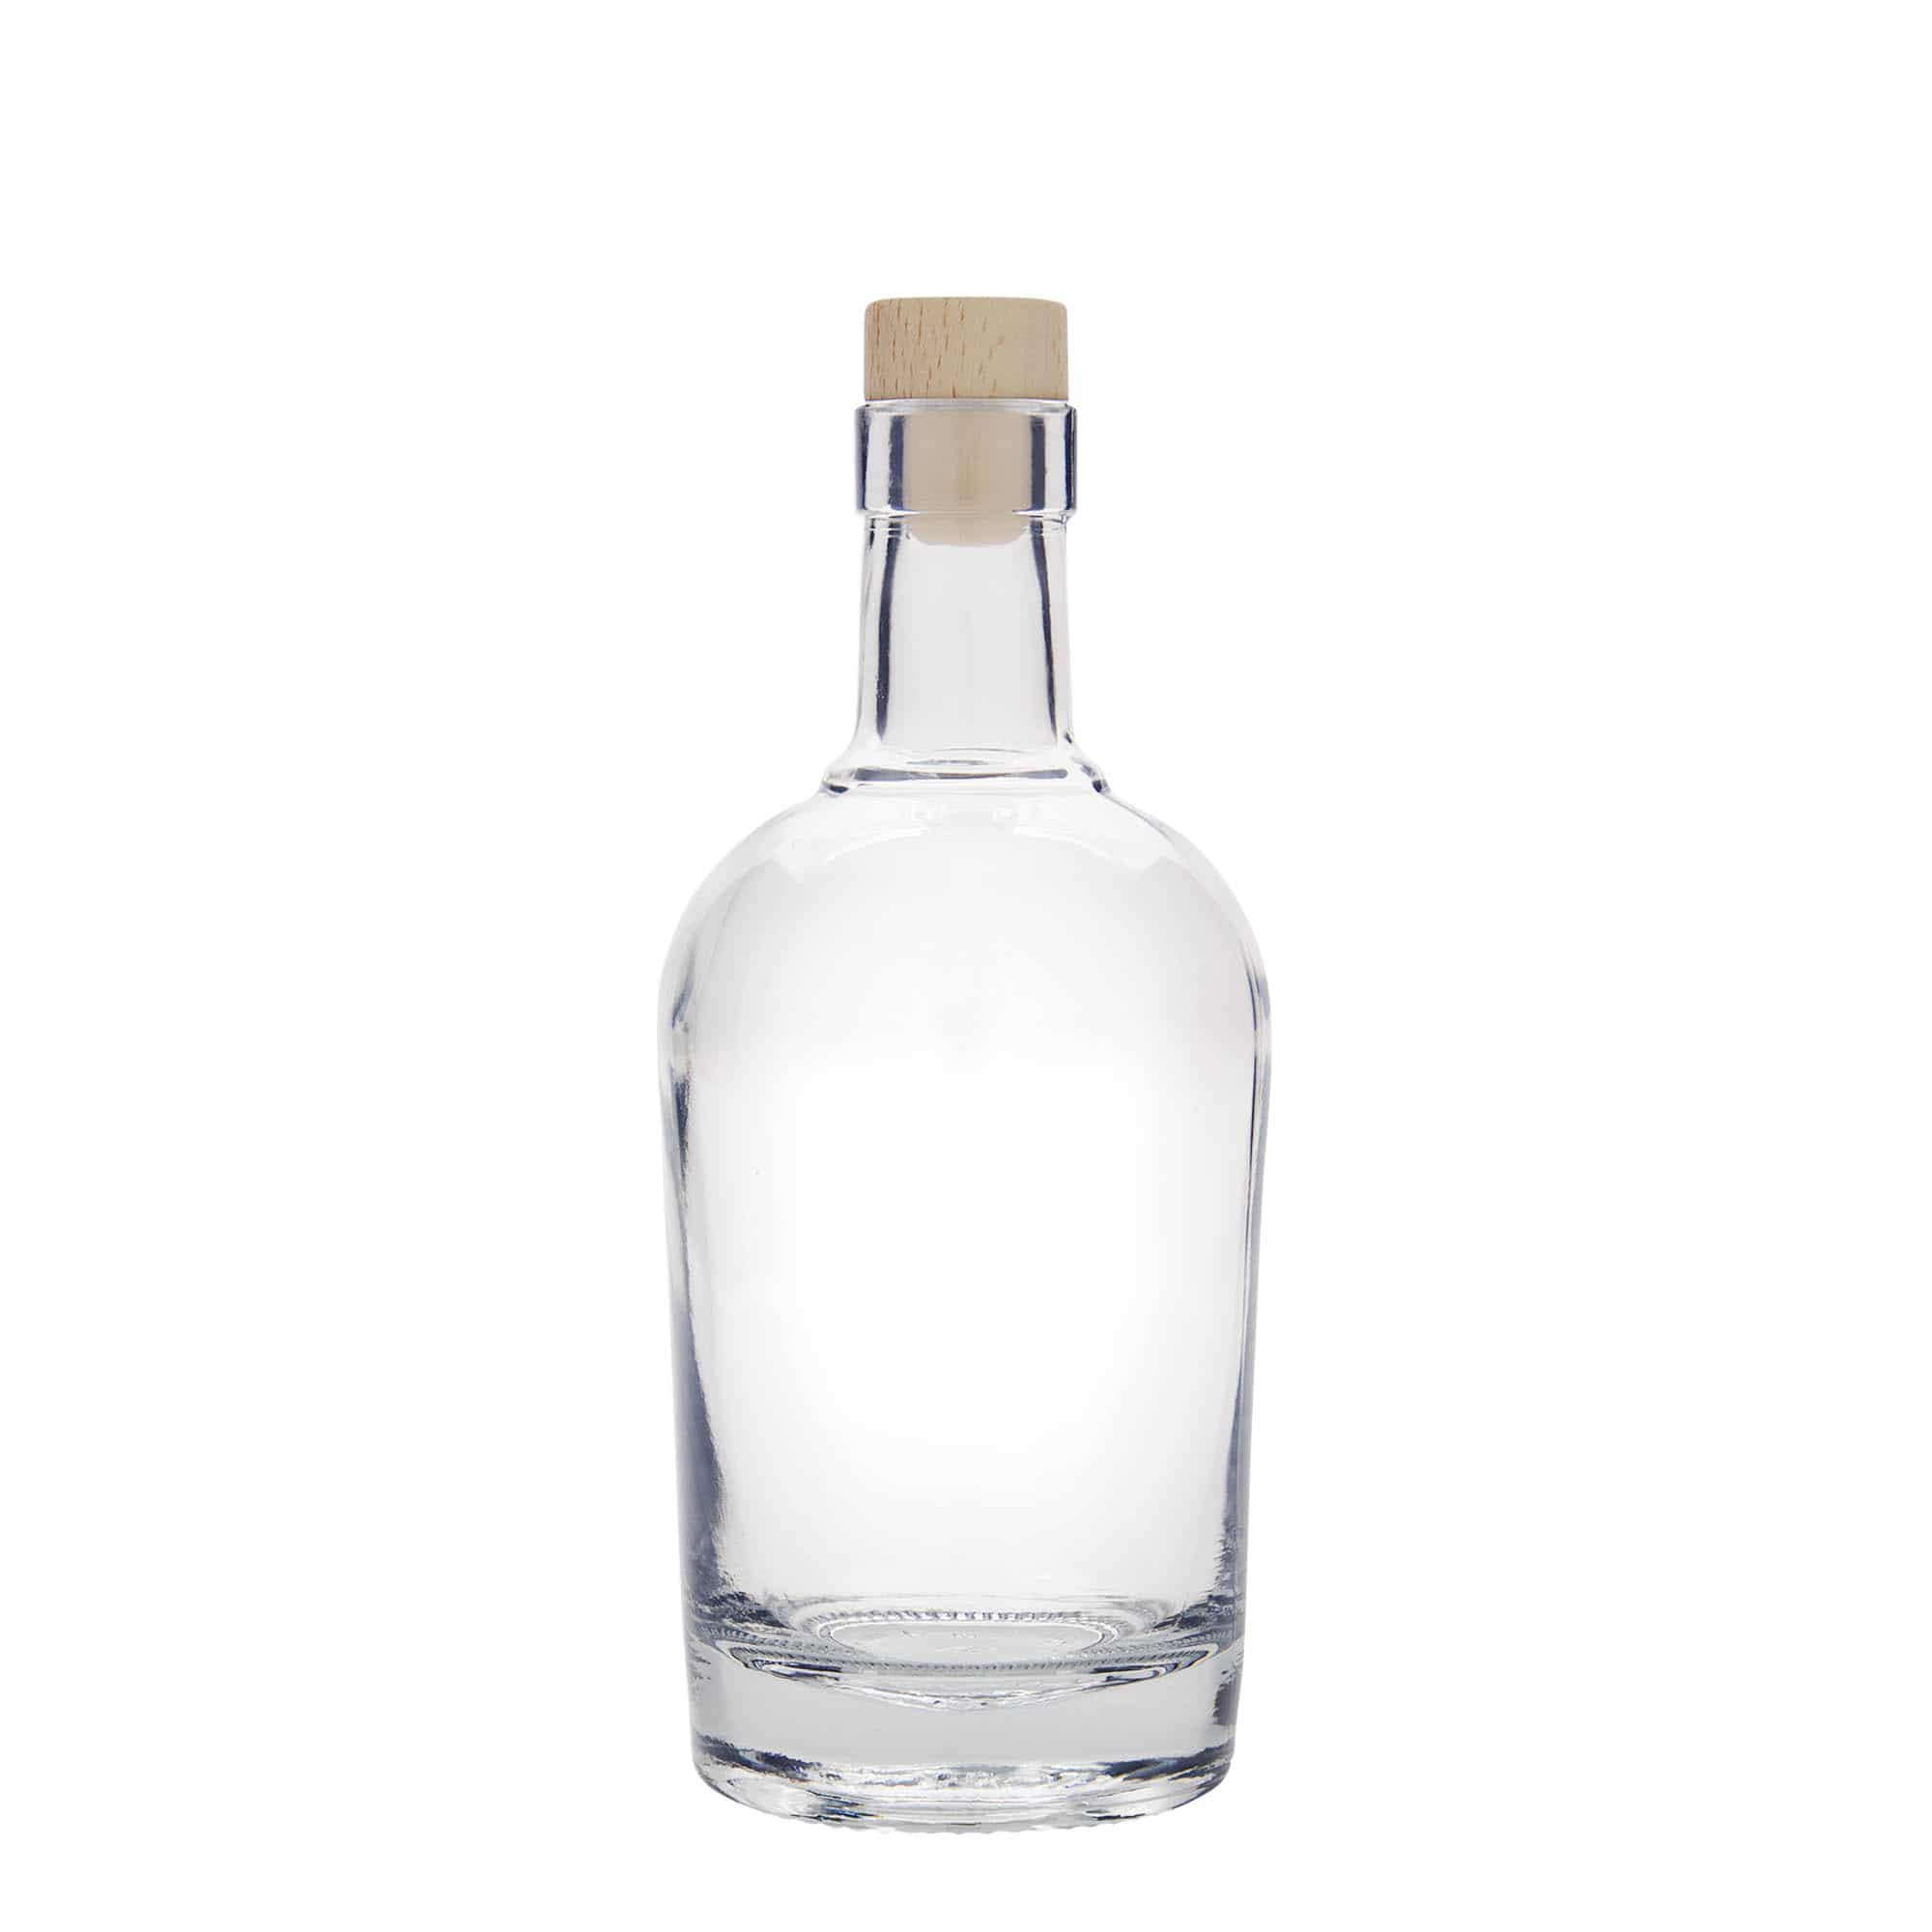 500 ml glass bottle 'Amarillo', closure: cork